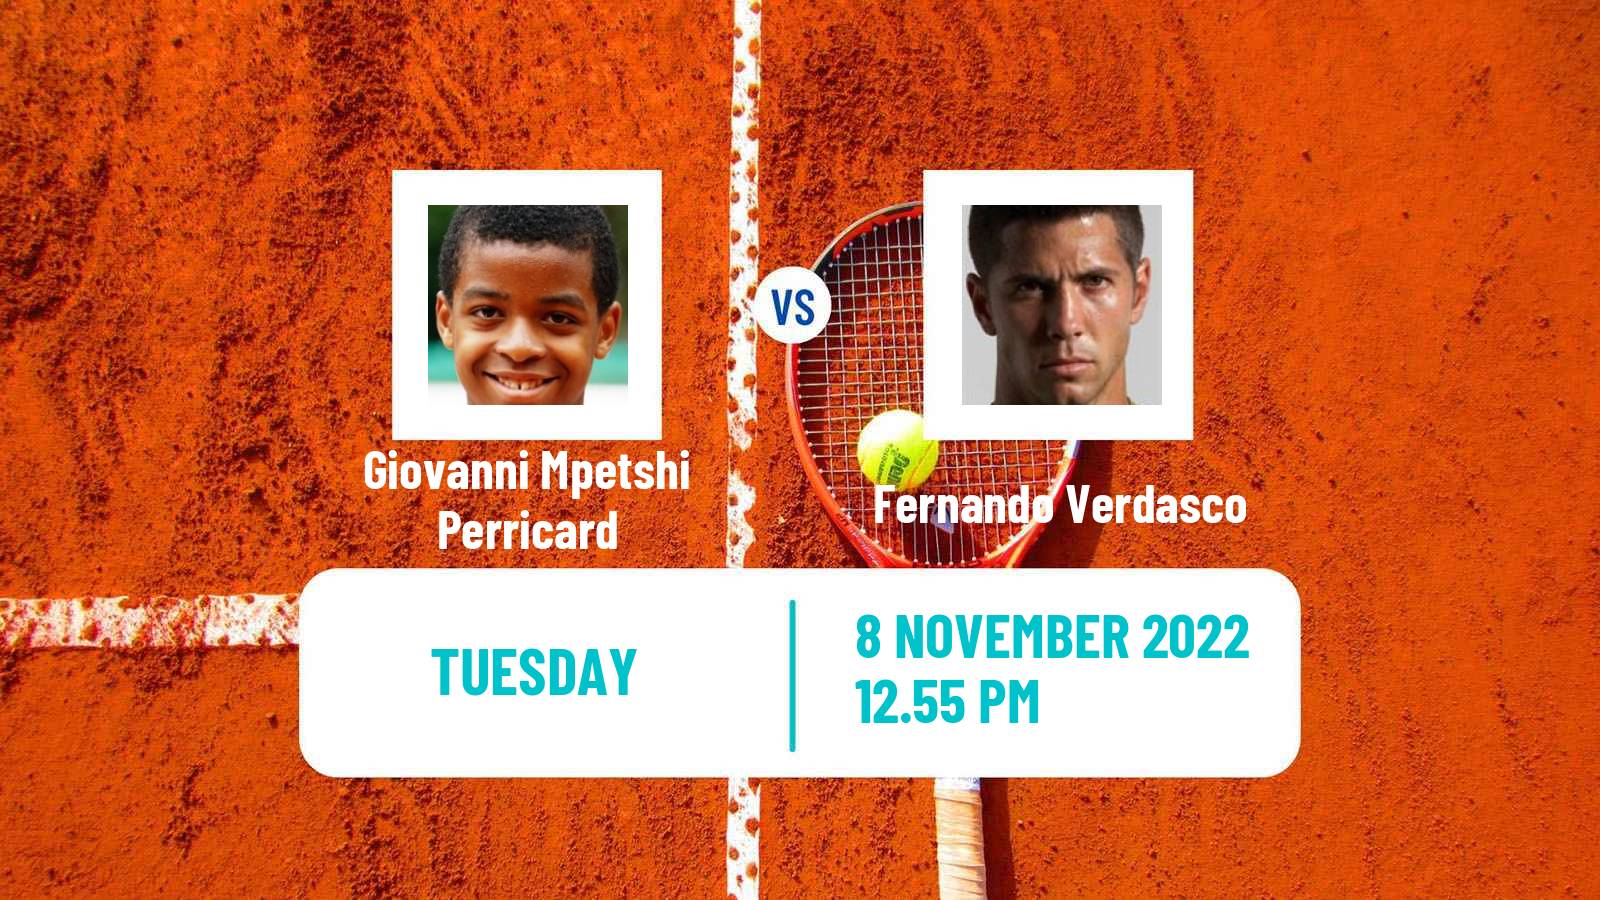 Tennis ATP Challenger Giovanni Mpetshi Perricard - Fernando Verdasco